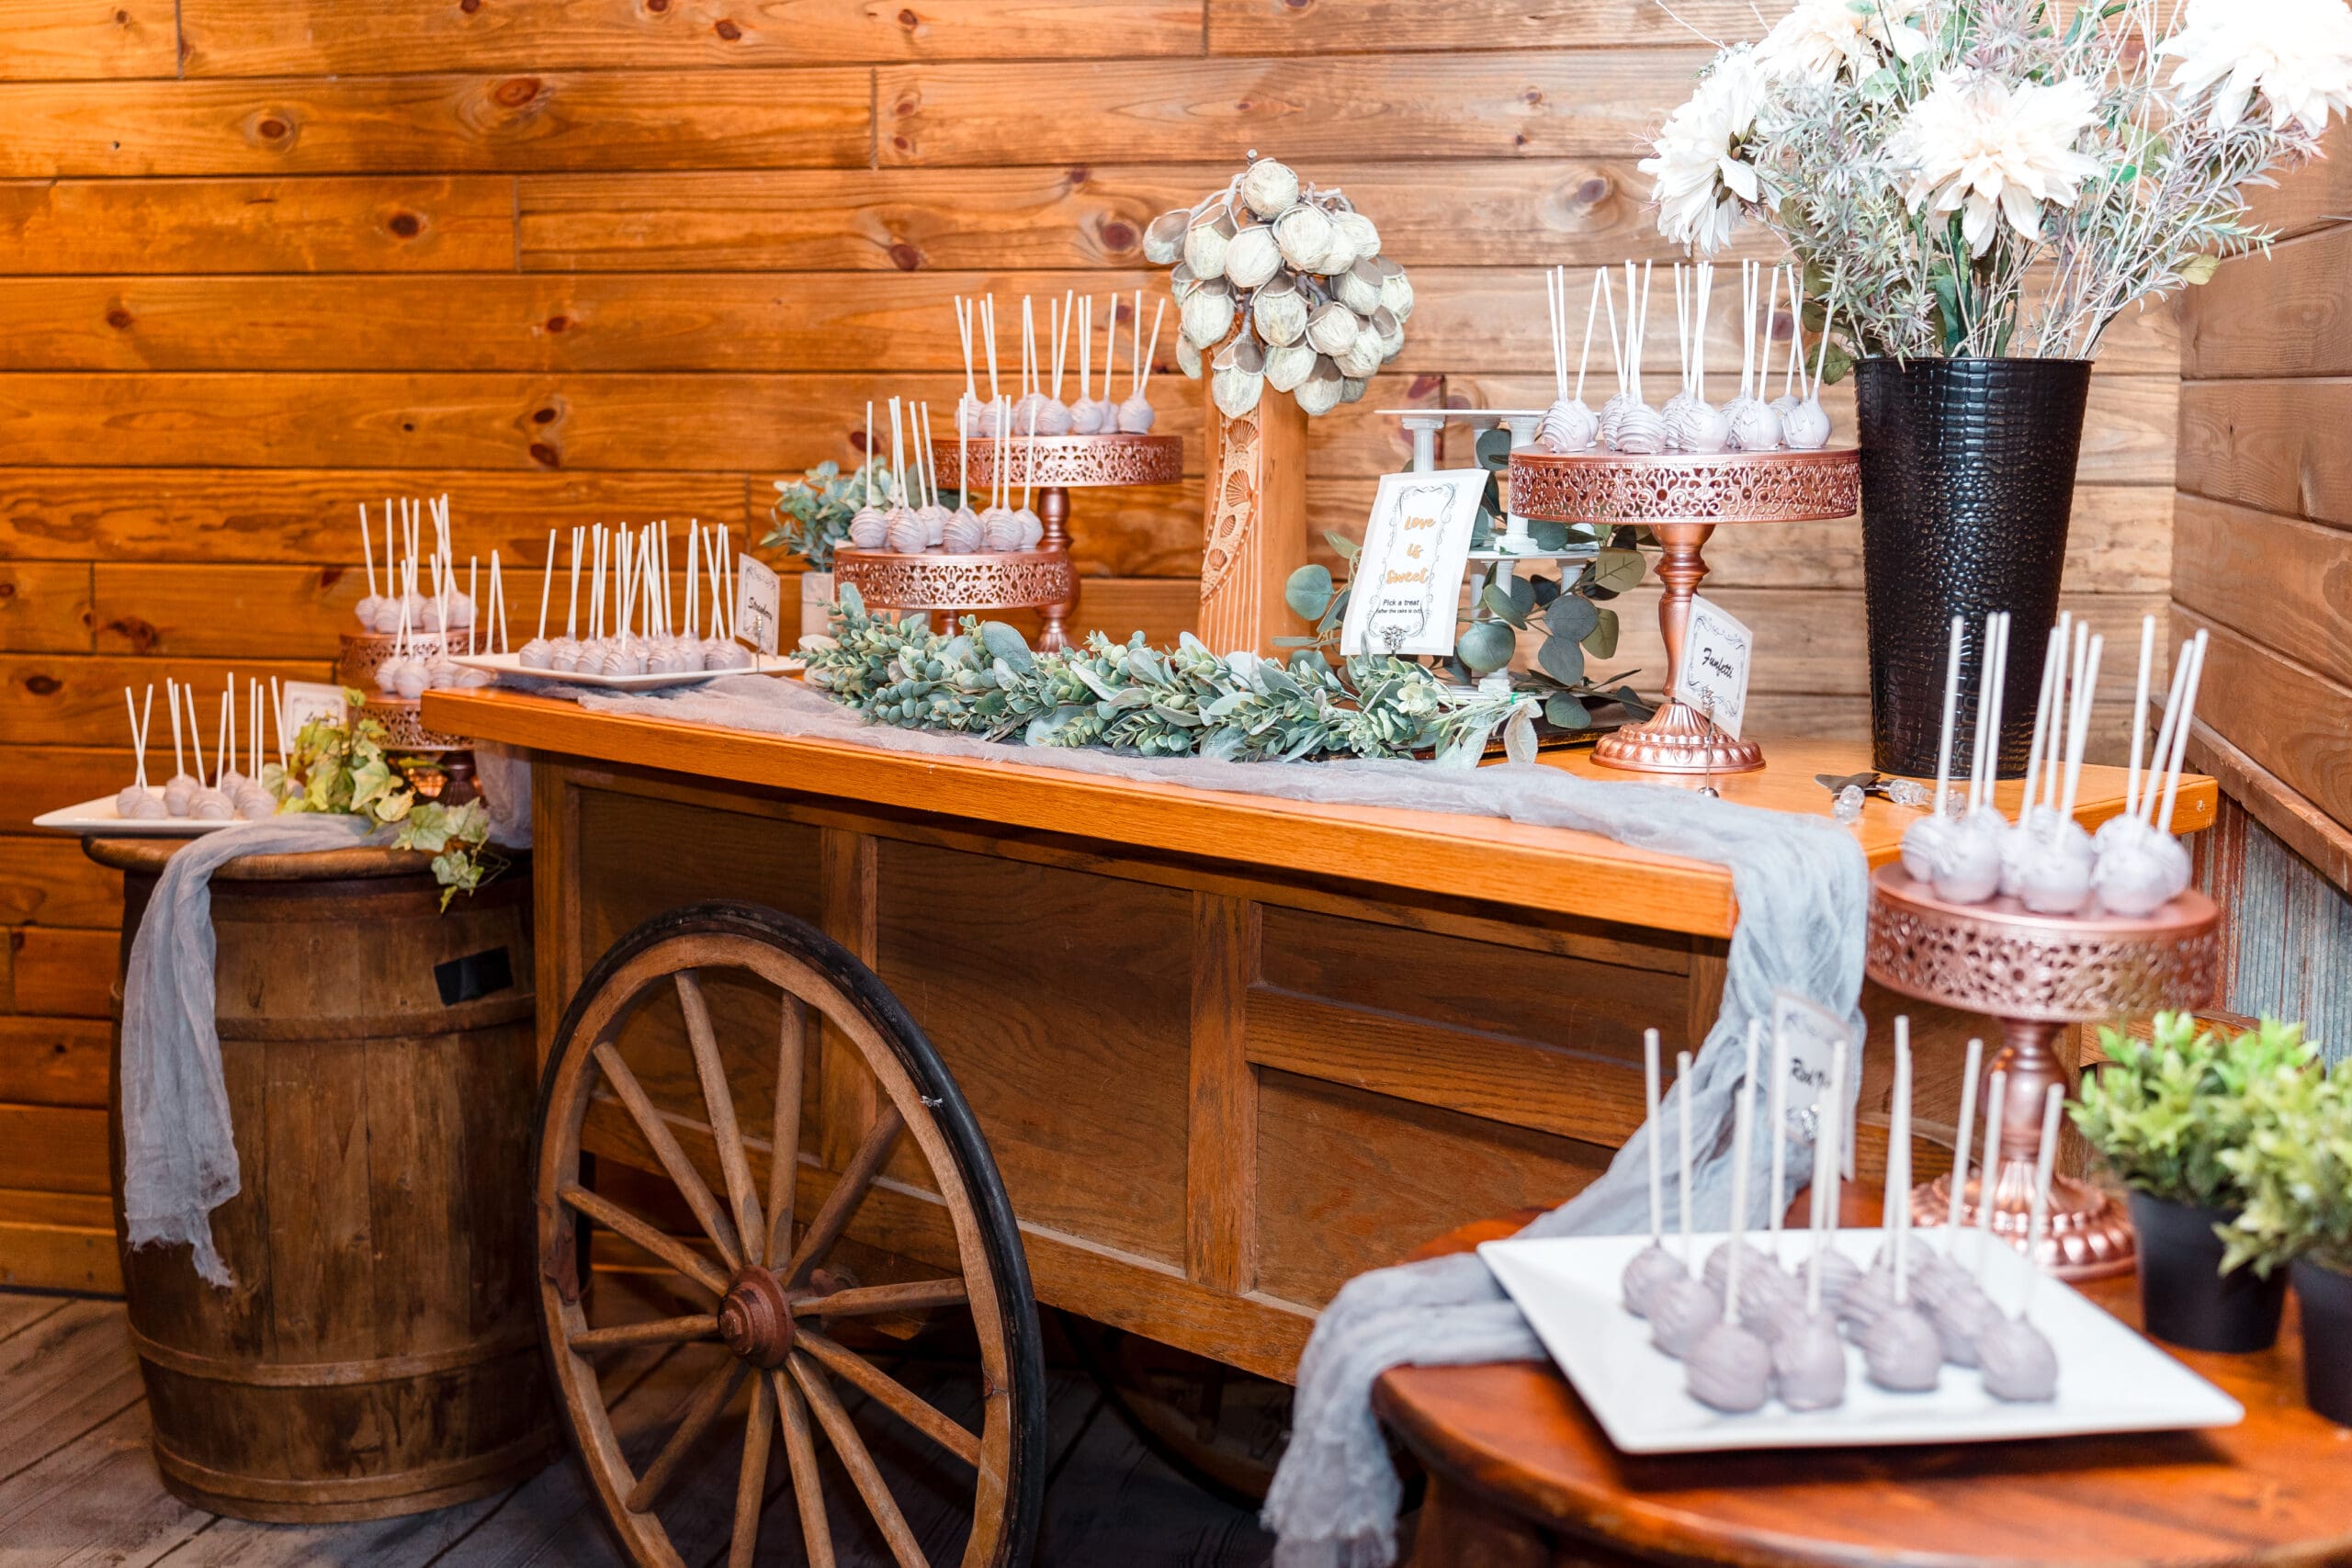 Decorative wooden wagon and barrels displaying cake pops at Hidden Barn wedding